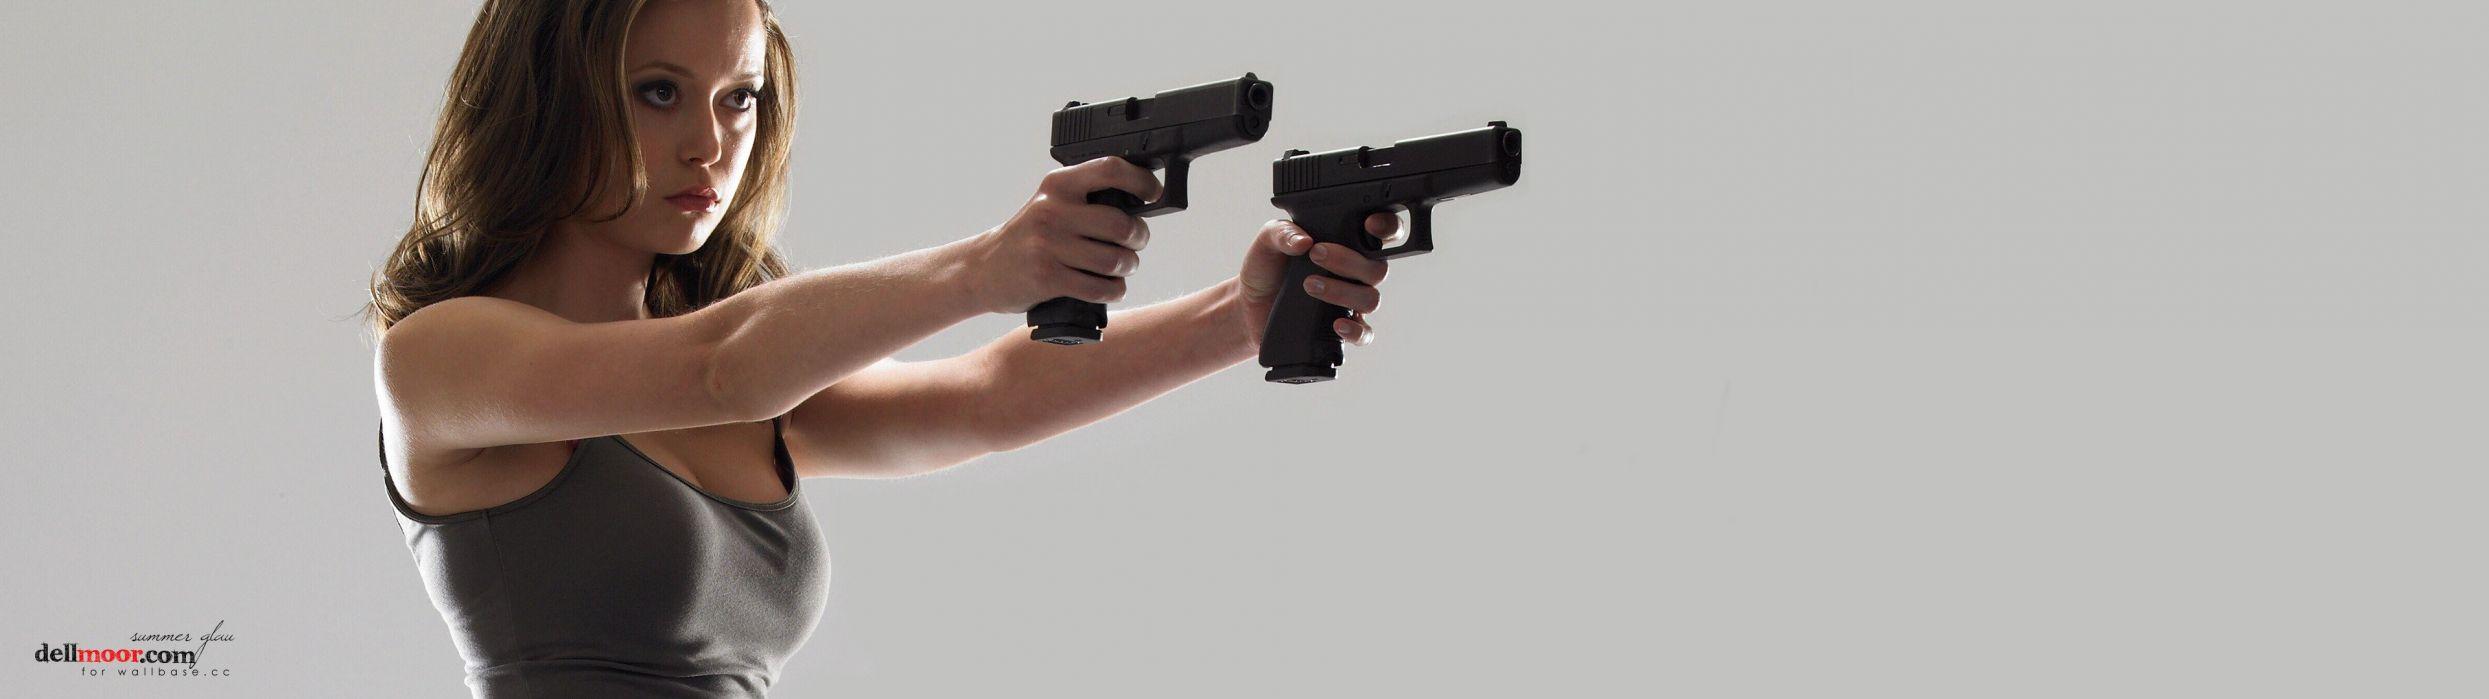 Women Pistols Guns Summer Glau Glock Terminator The Sarah Connor